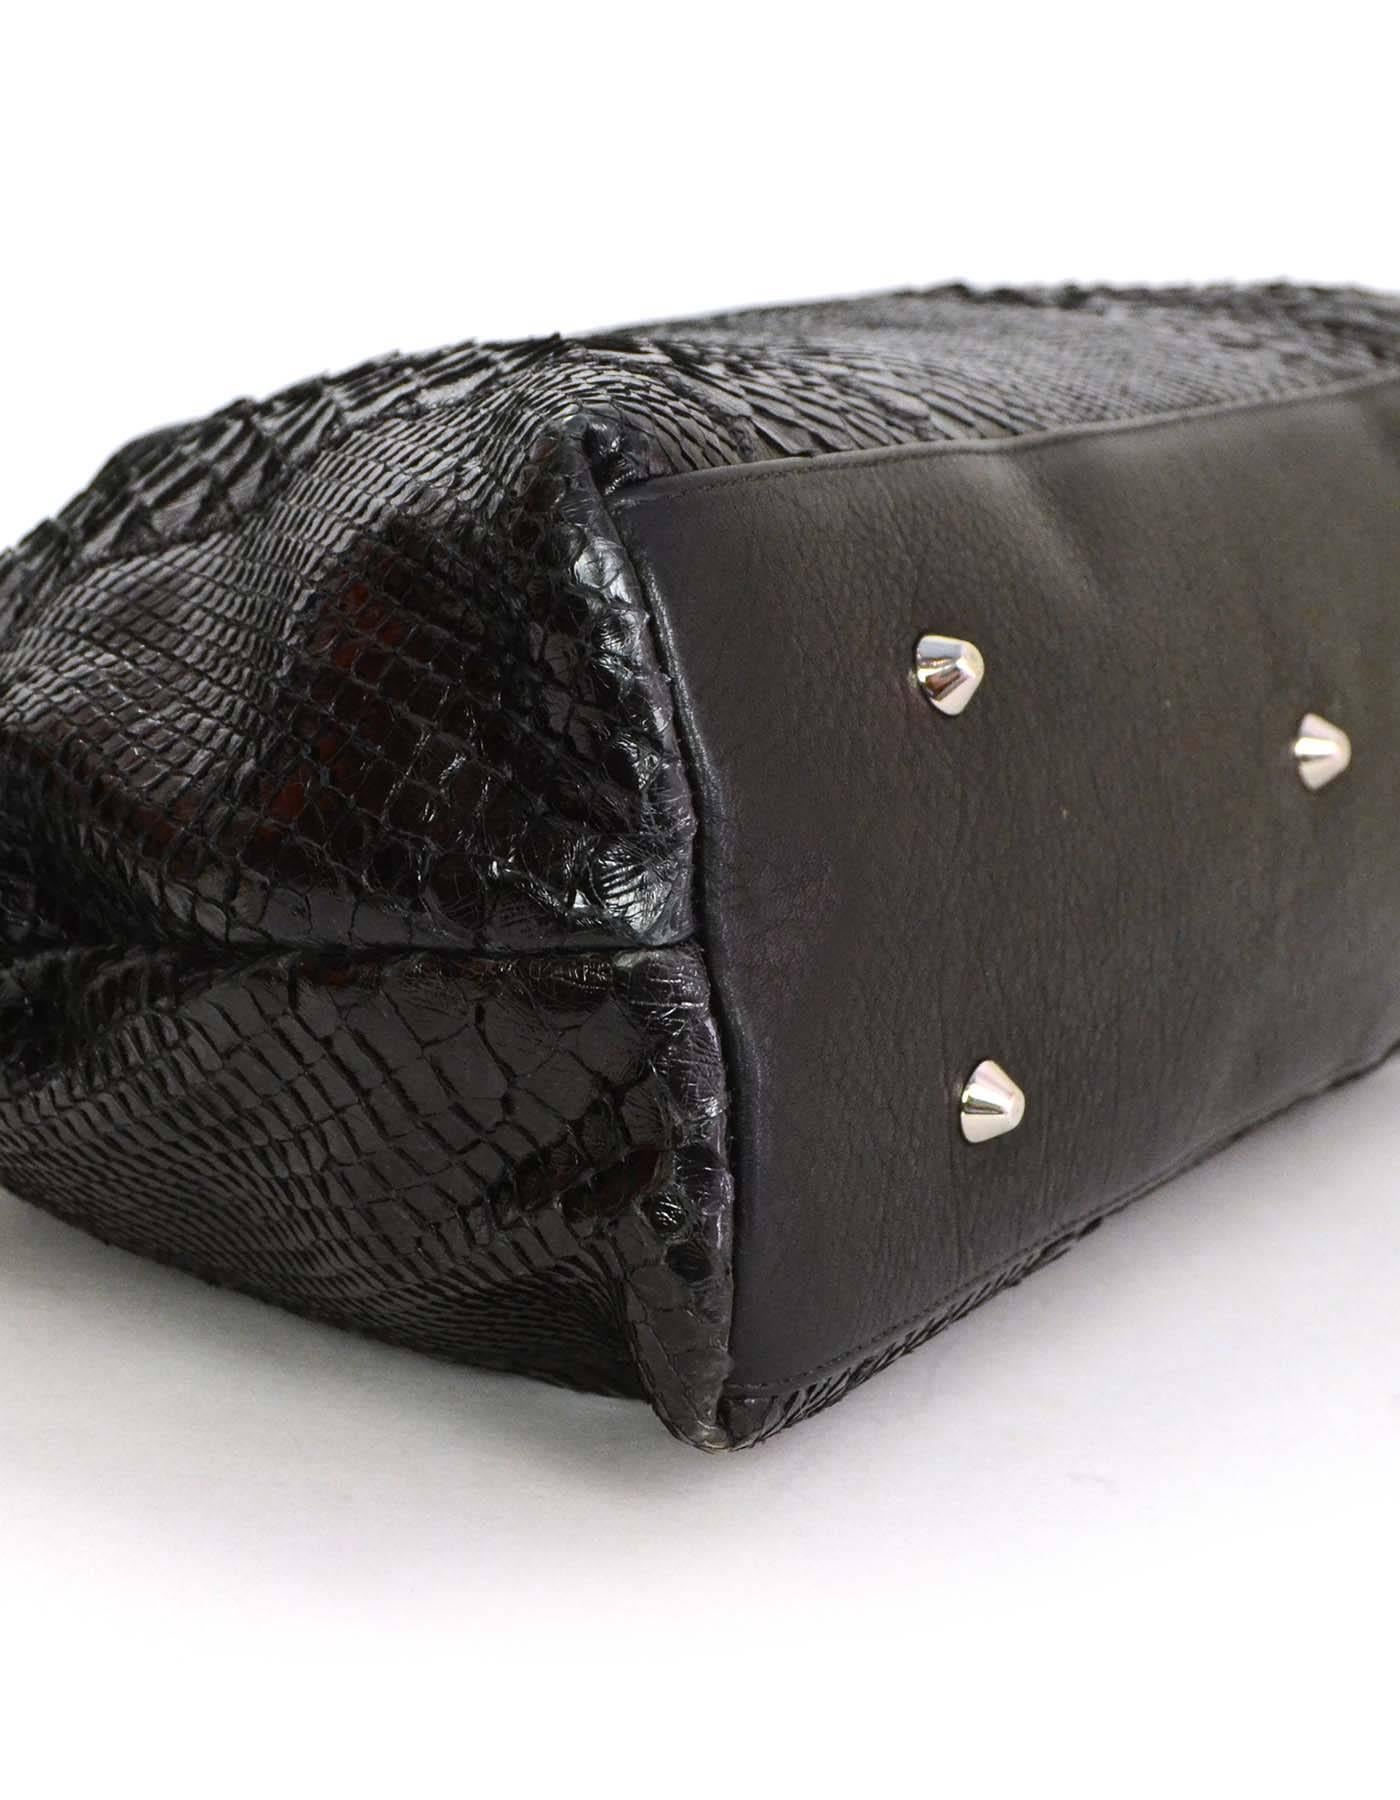 Women's Carlos Falchi Black Python Shoulder Bag rt. $2, 895